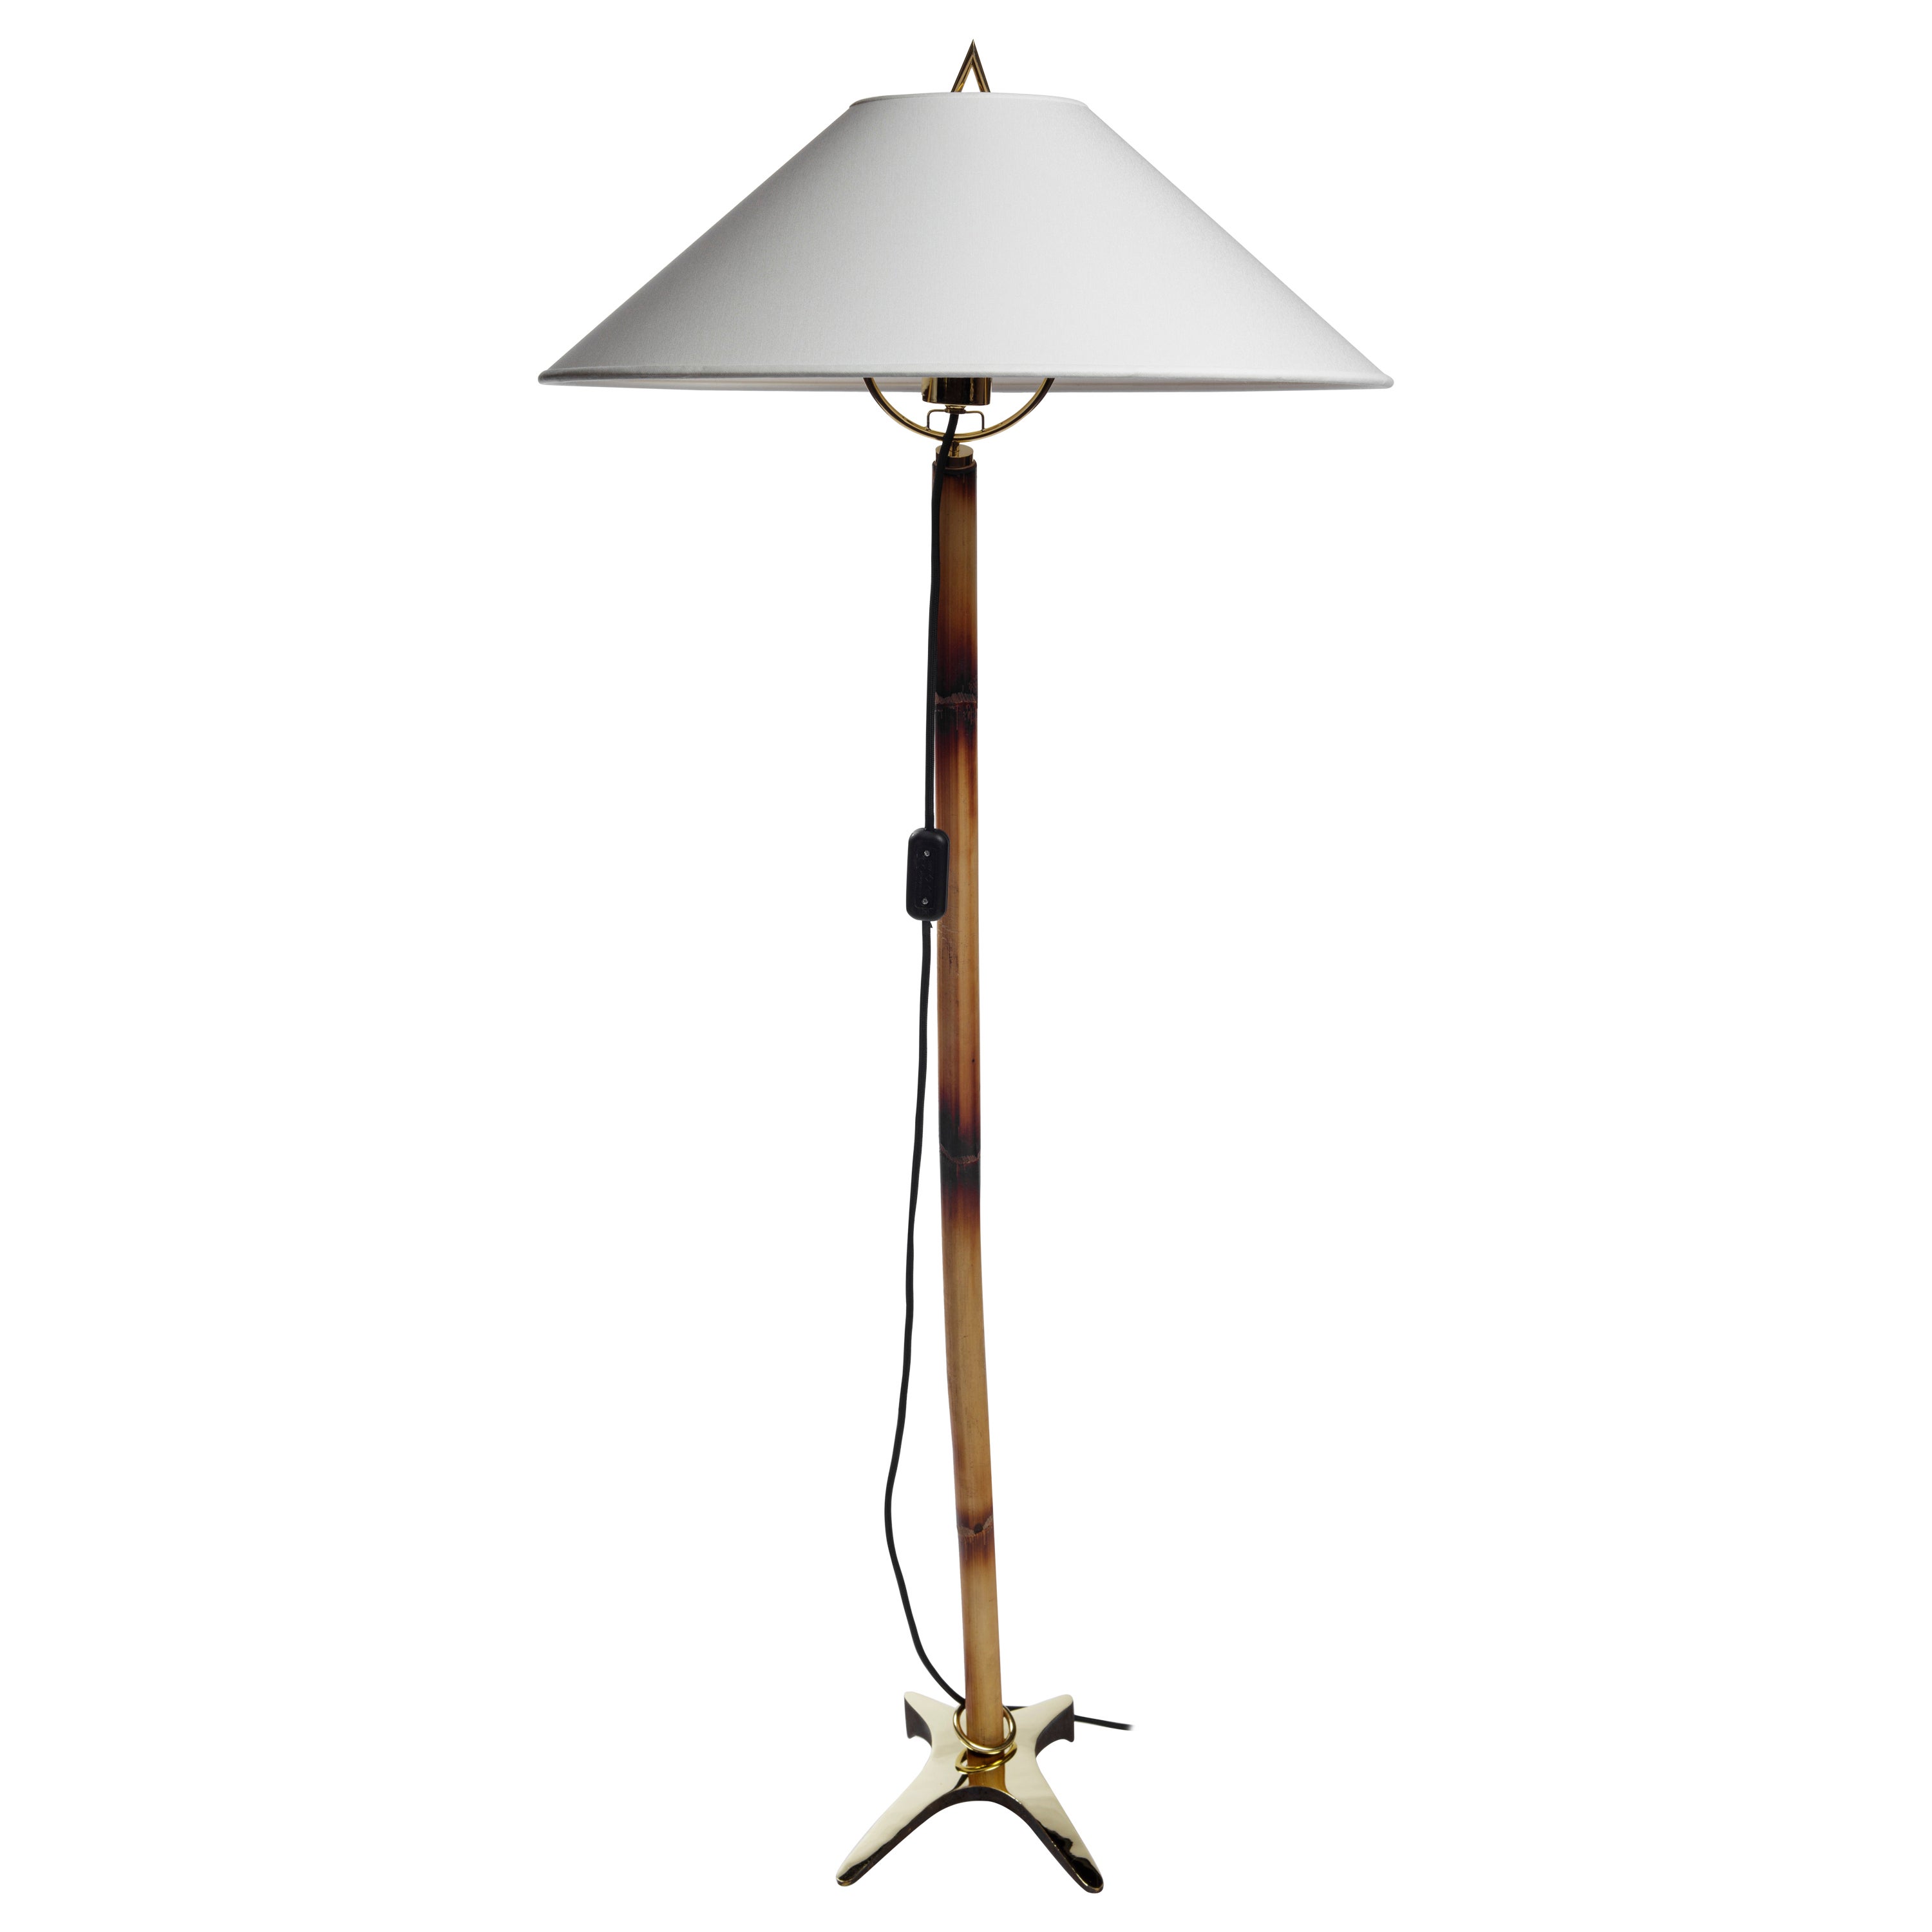 Carl Auböck #3740-1 Floor Lamp "Butterfly" For Sale